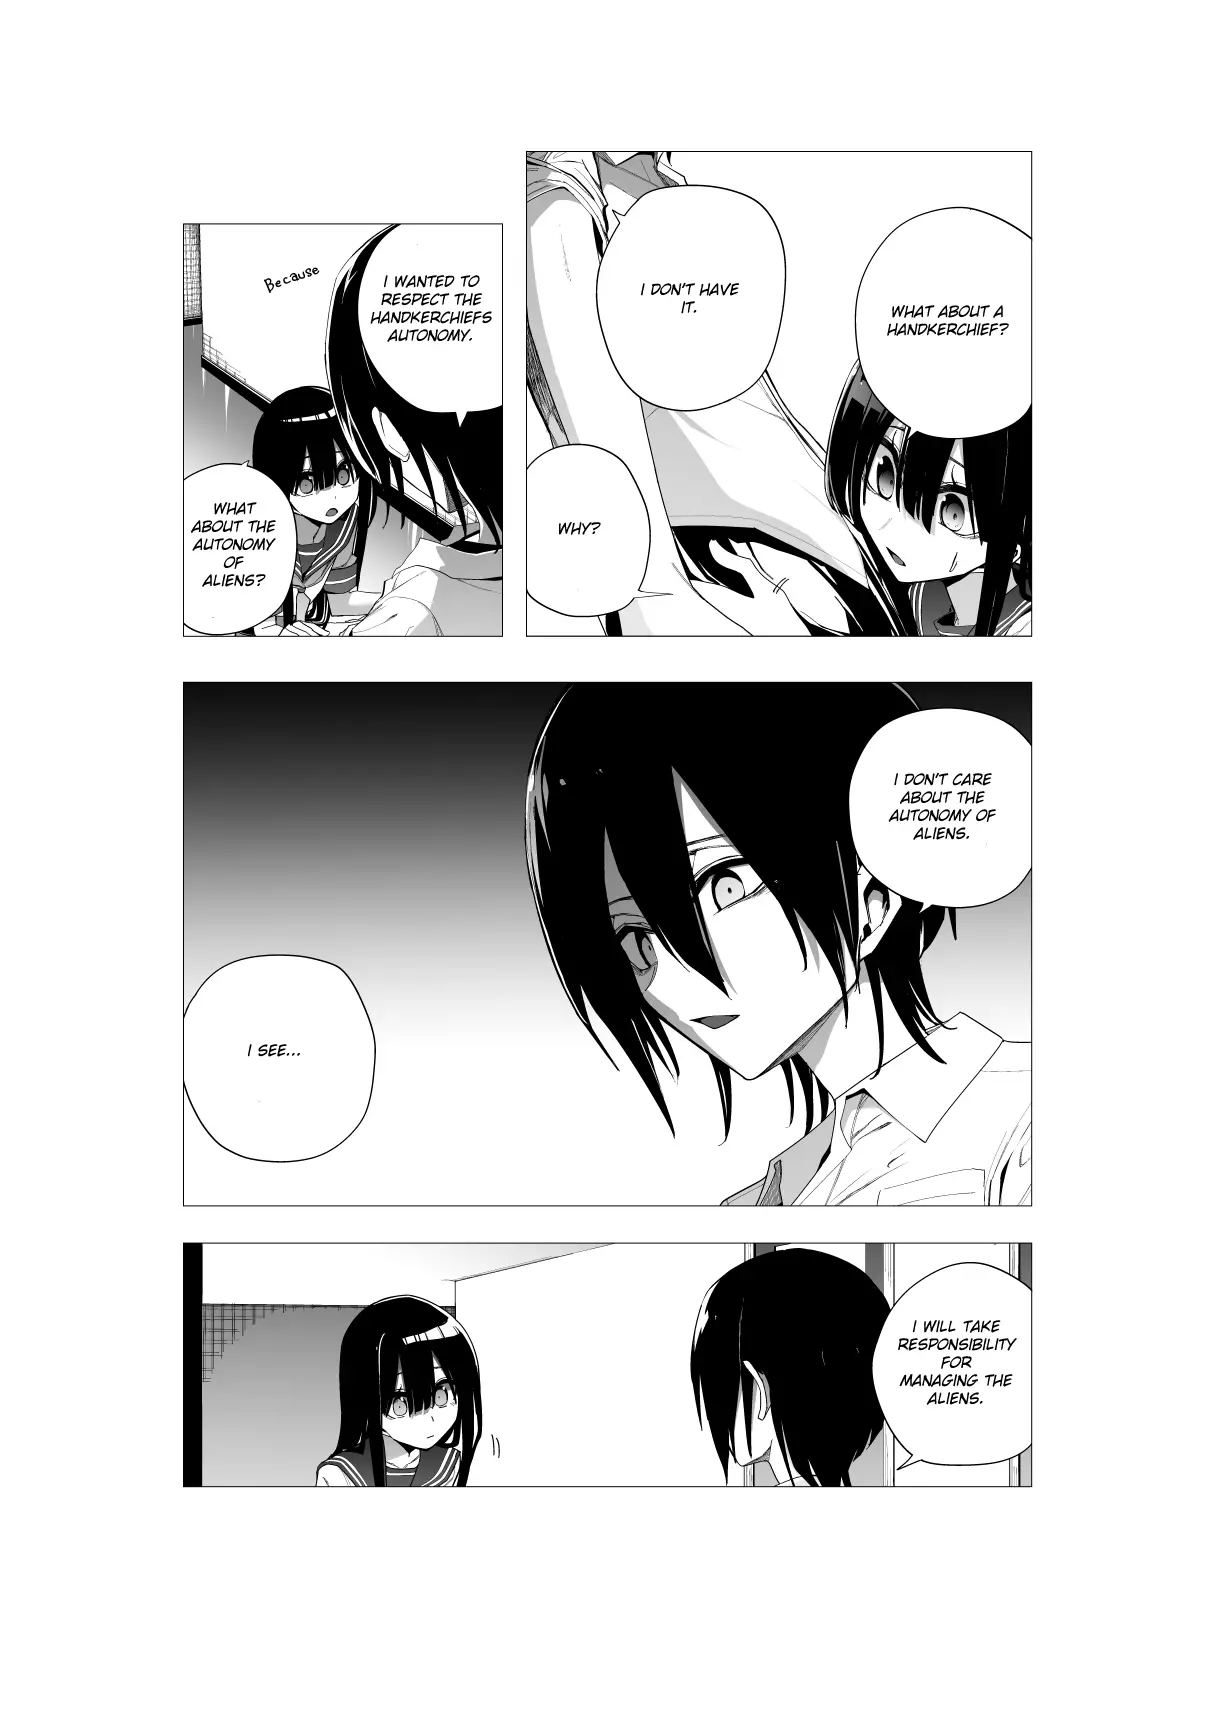 Mitsuishi-San Is Being Weird This Year - 26 page 8-4855edb3